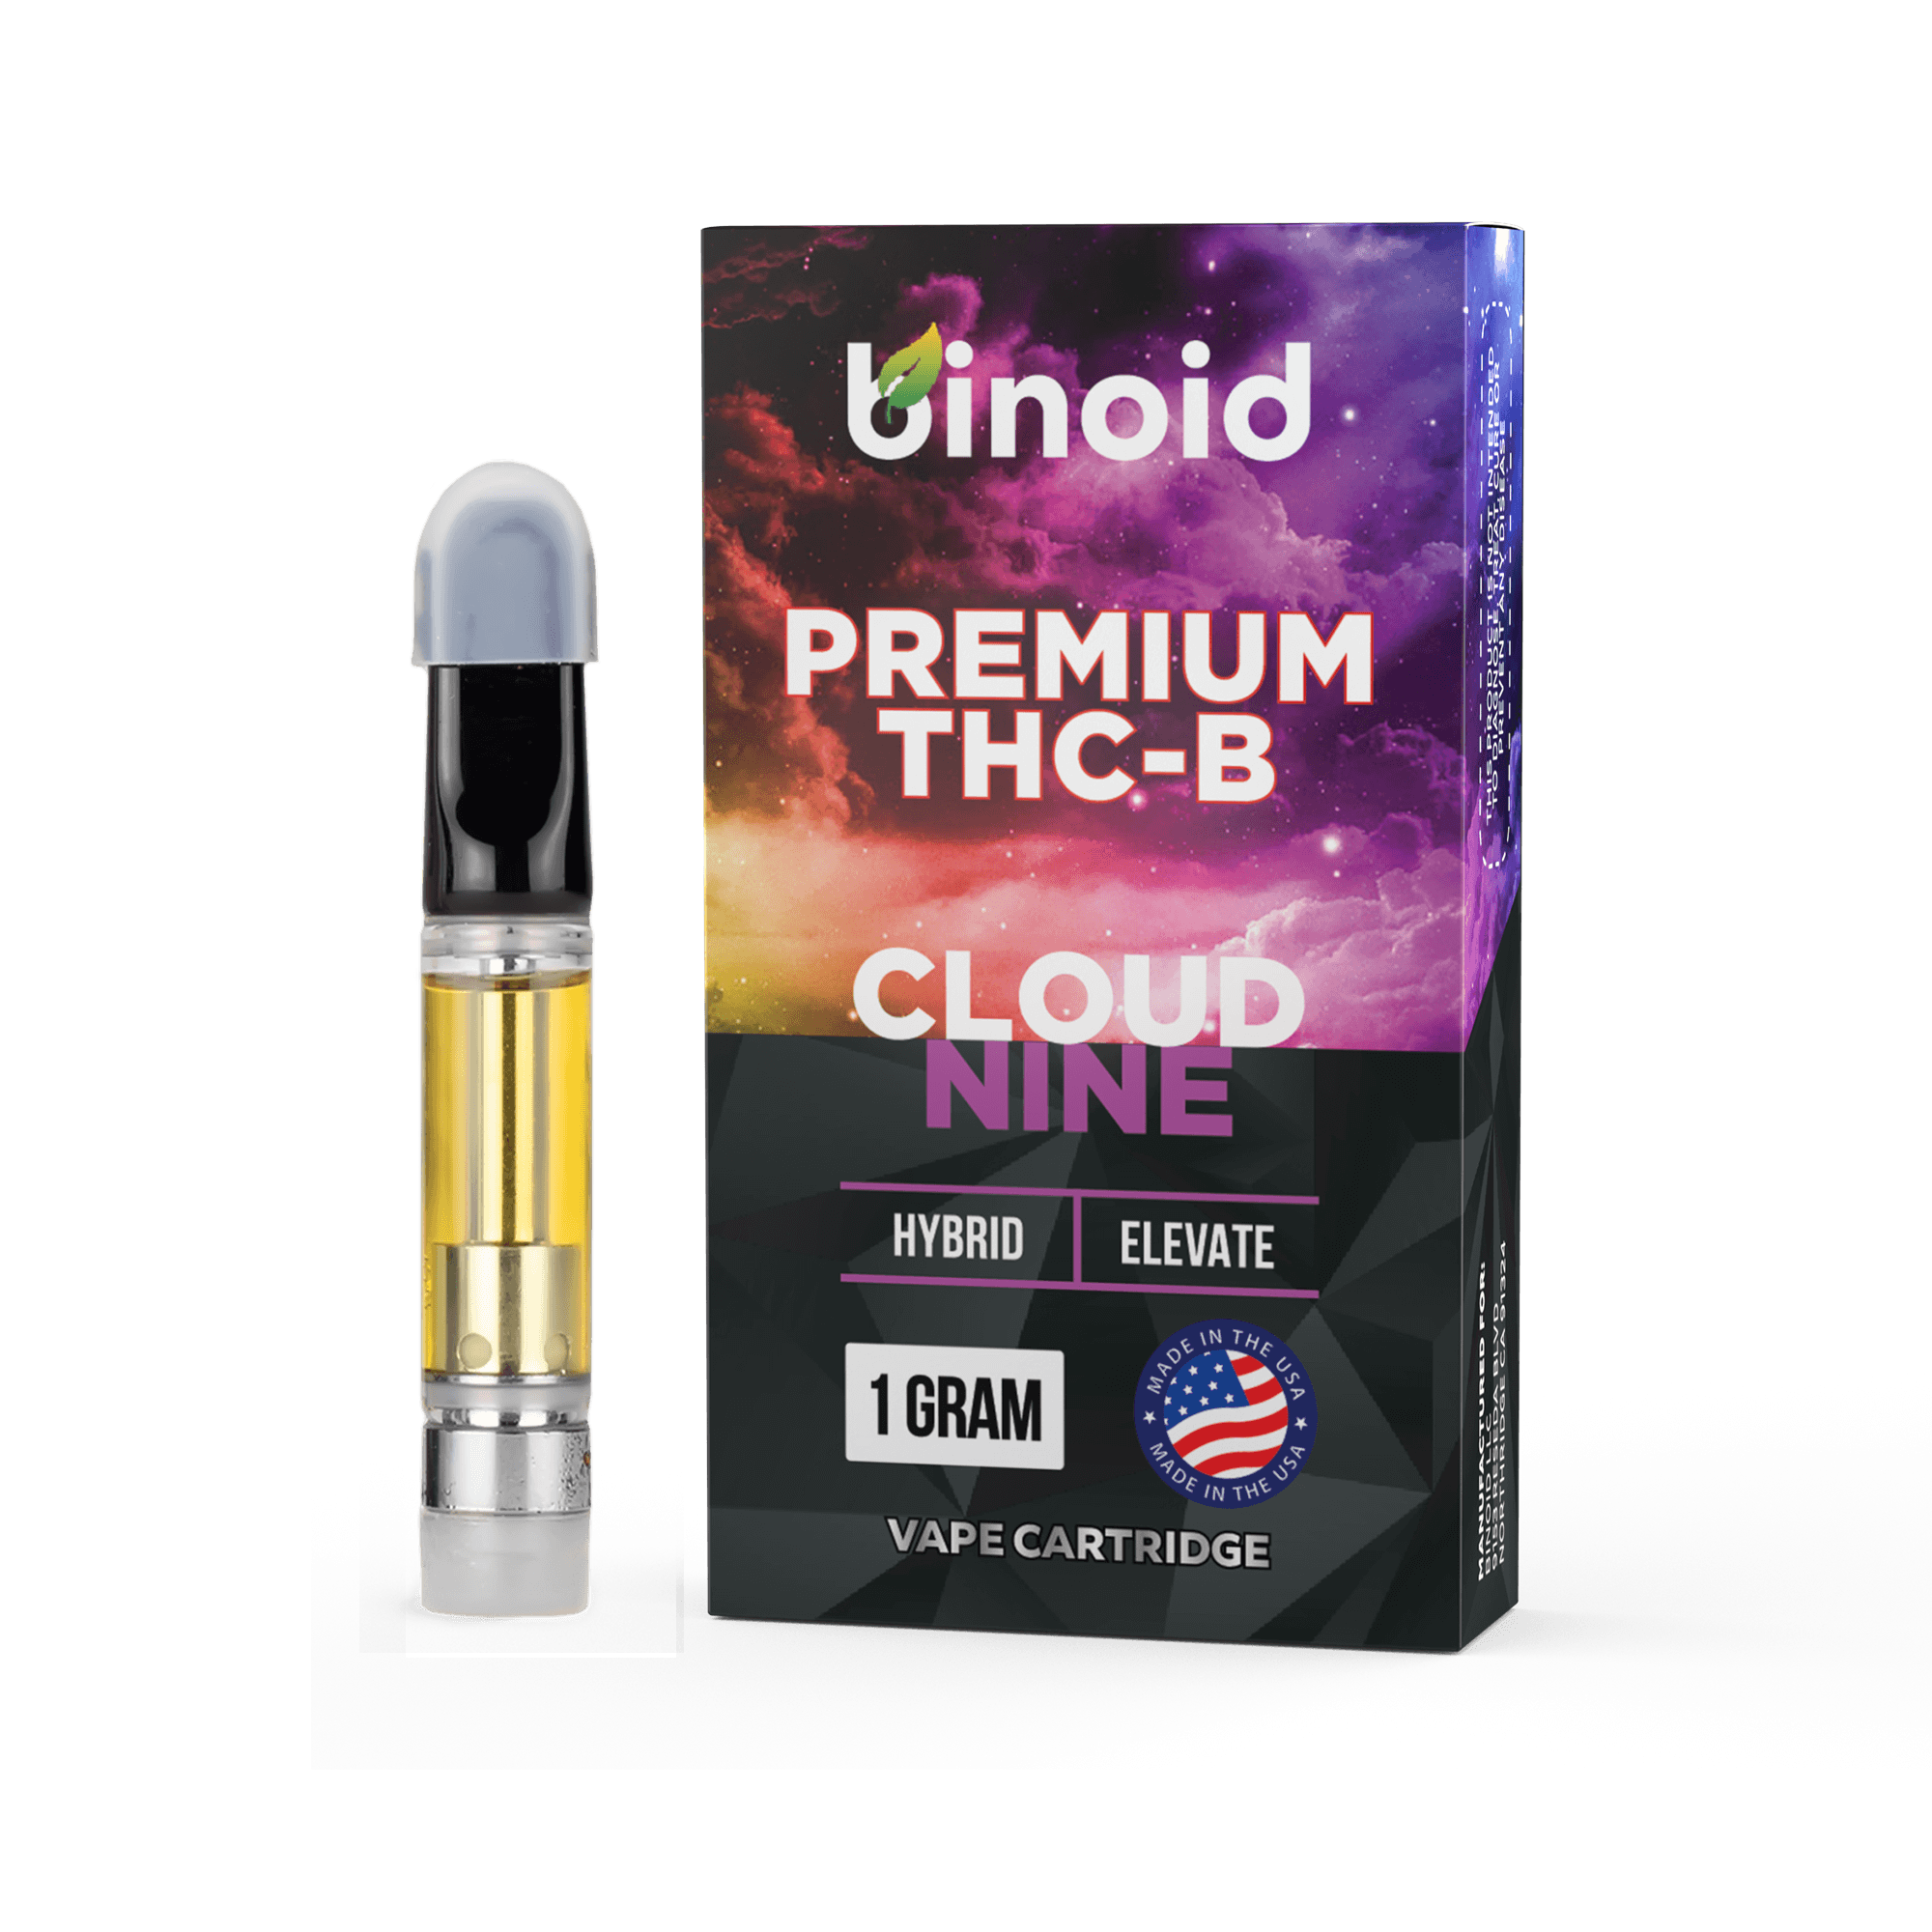 Binoid THC-B Vape Cartridge - Cloud Nine Best Price